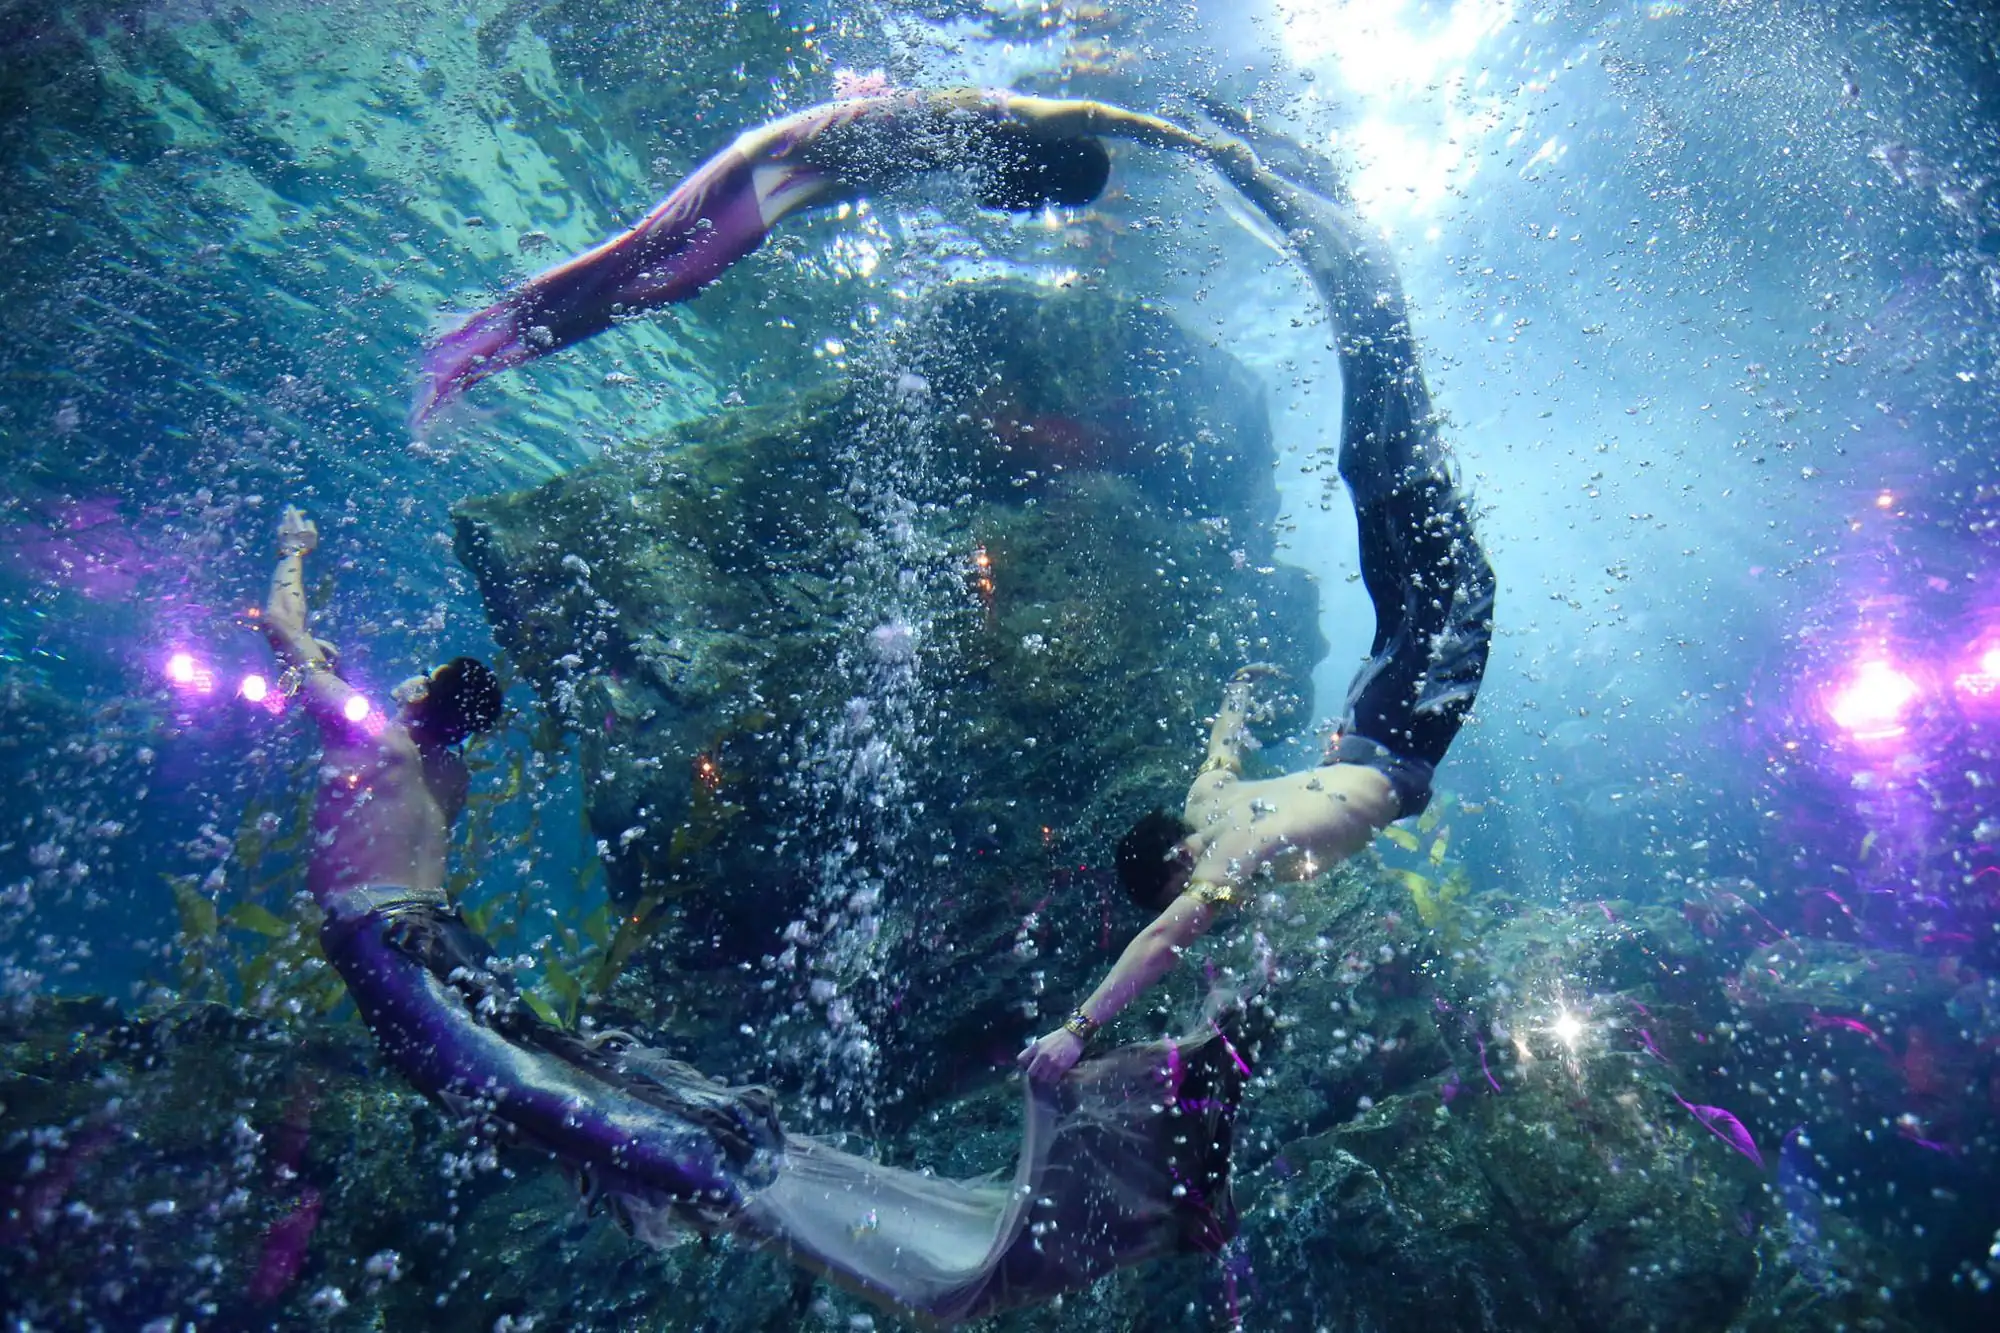 sea-life-bangkok-mermaid-kingdom